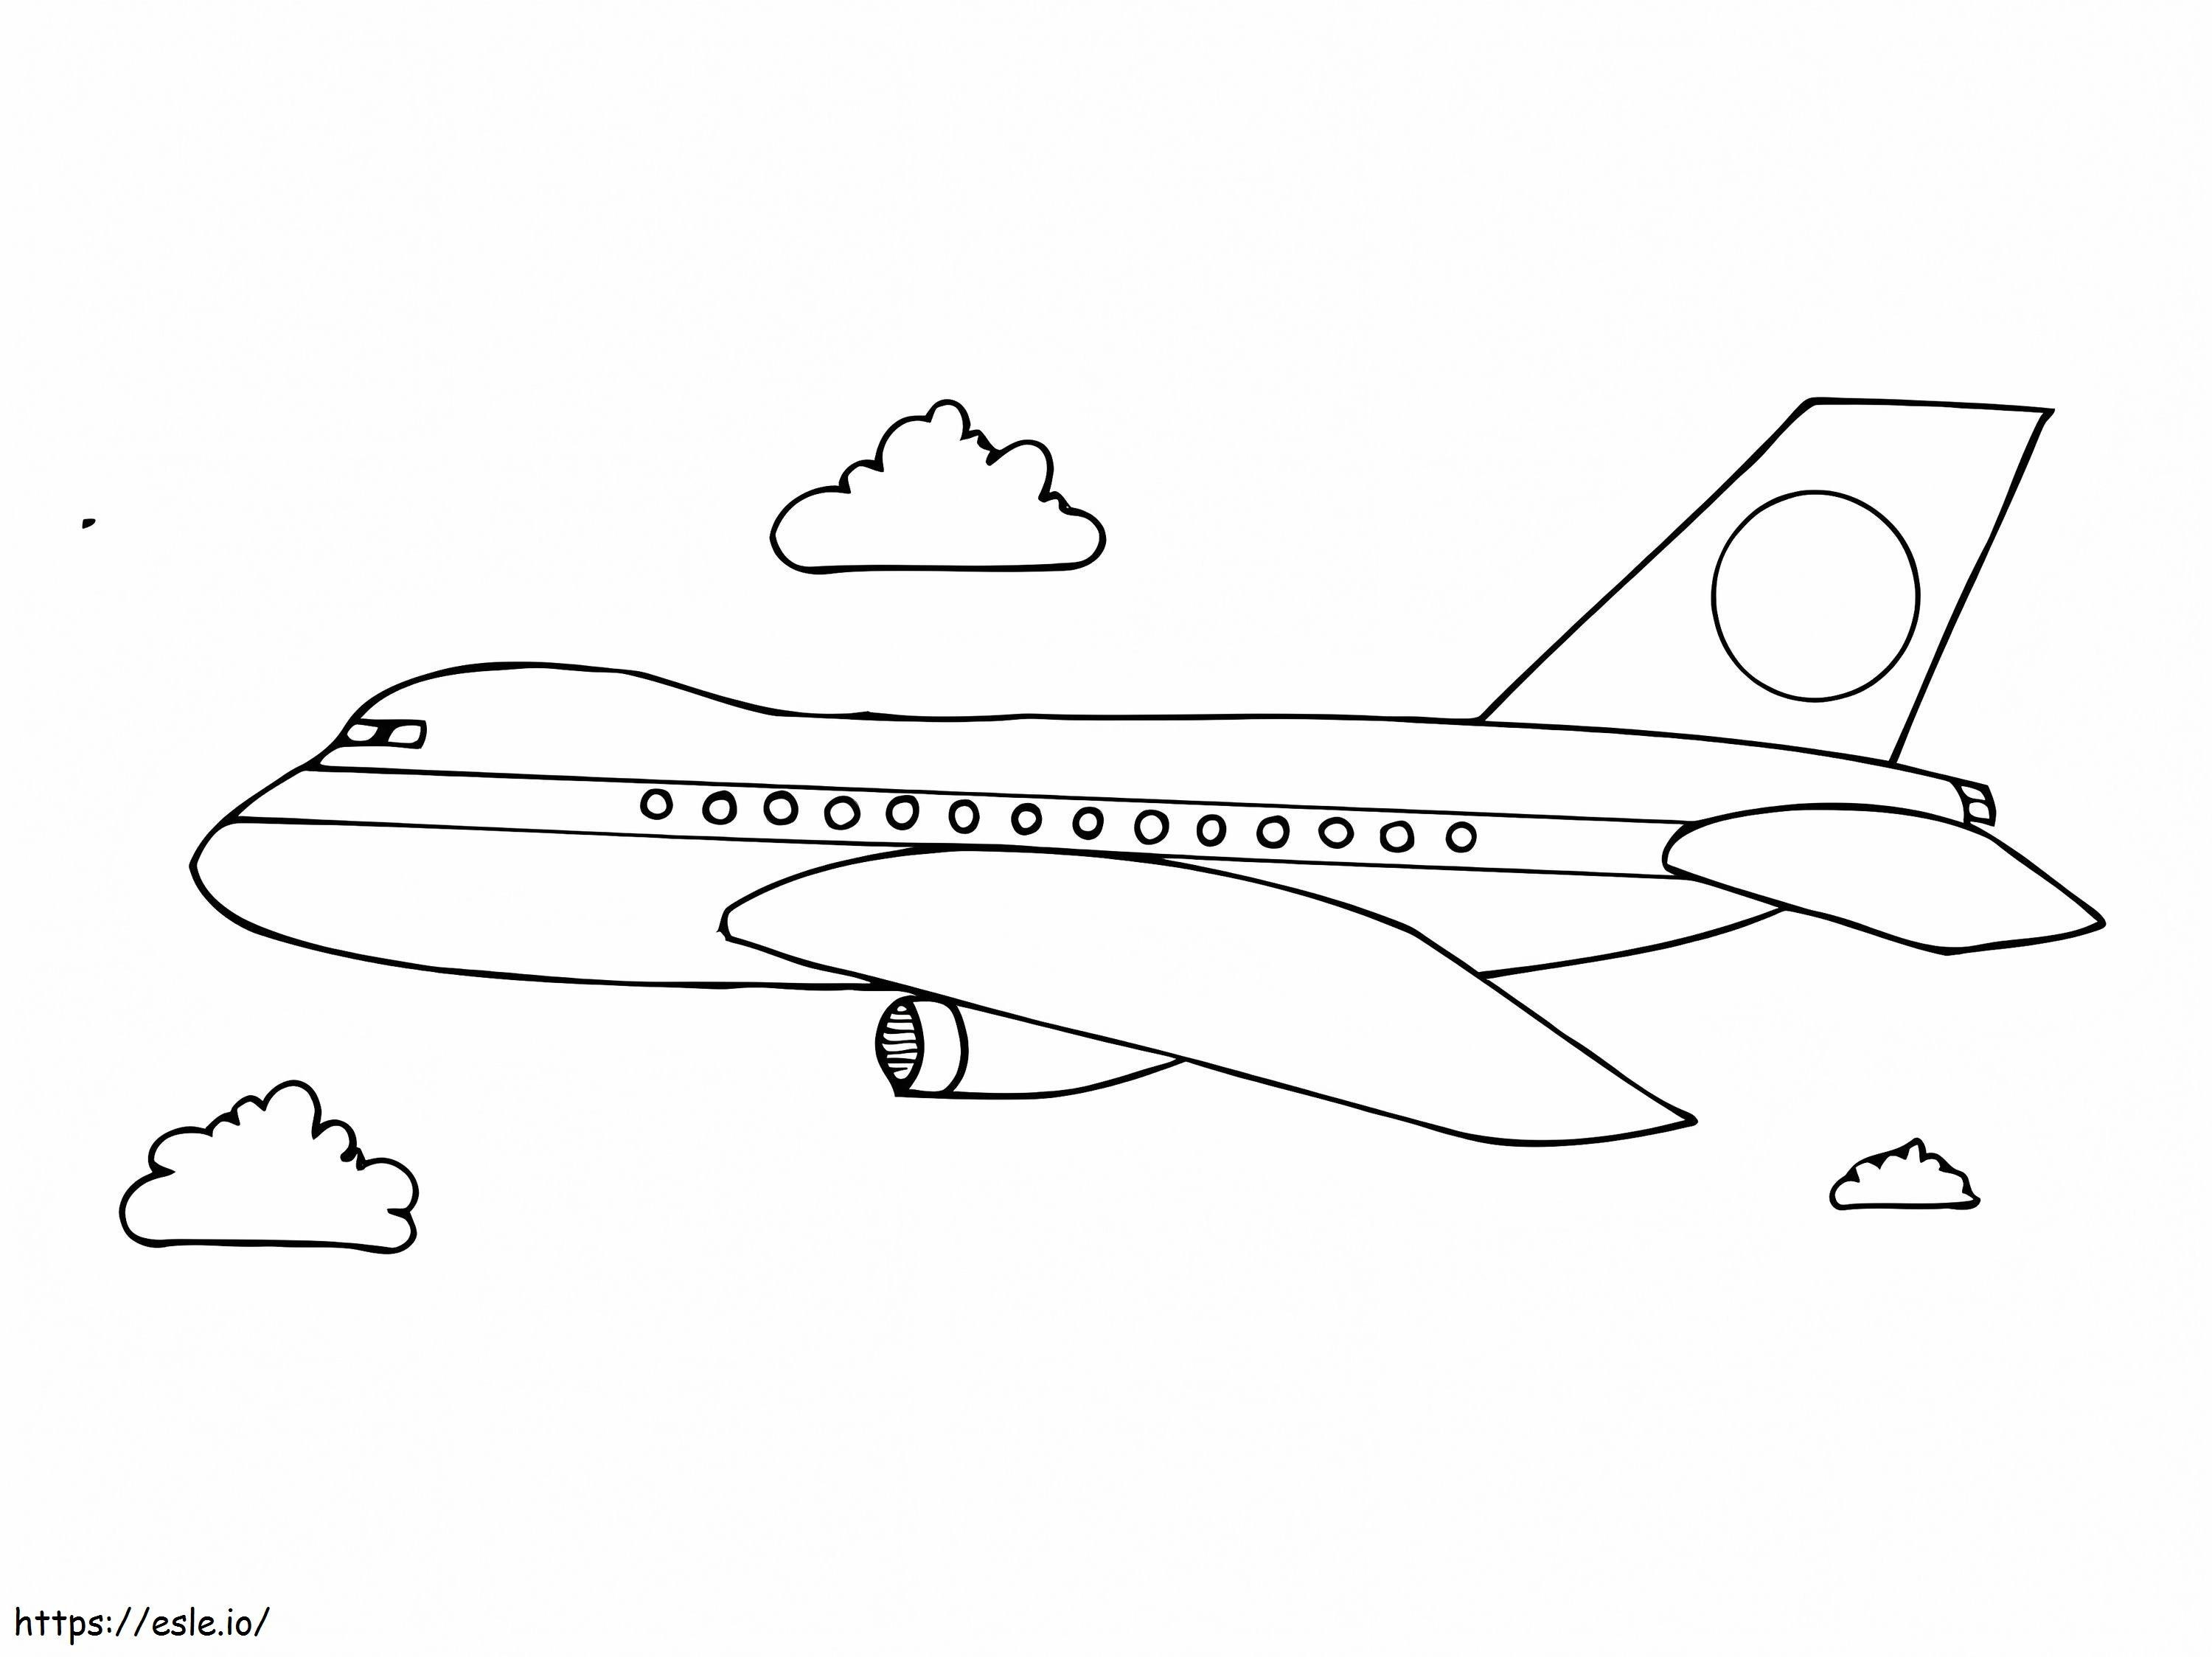 Aeroplane 4 coloring page